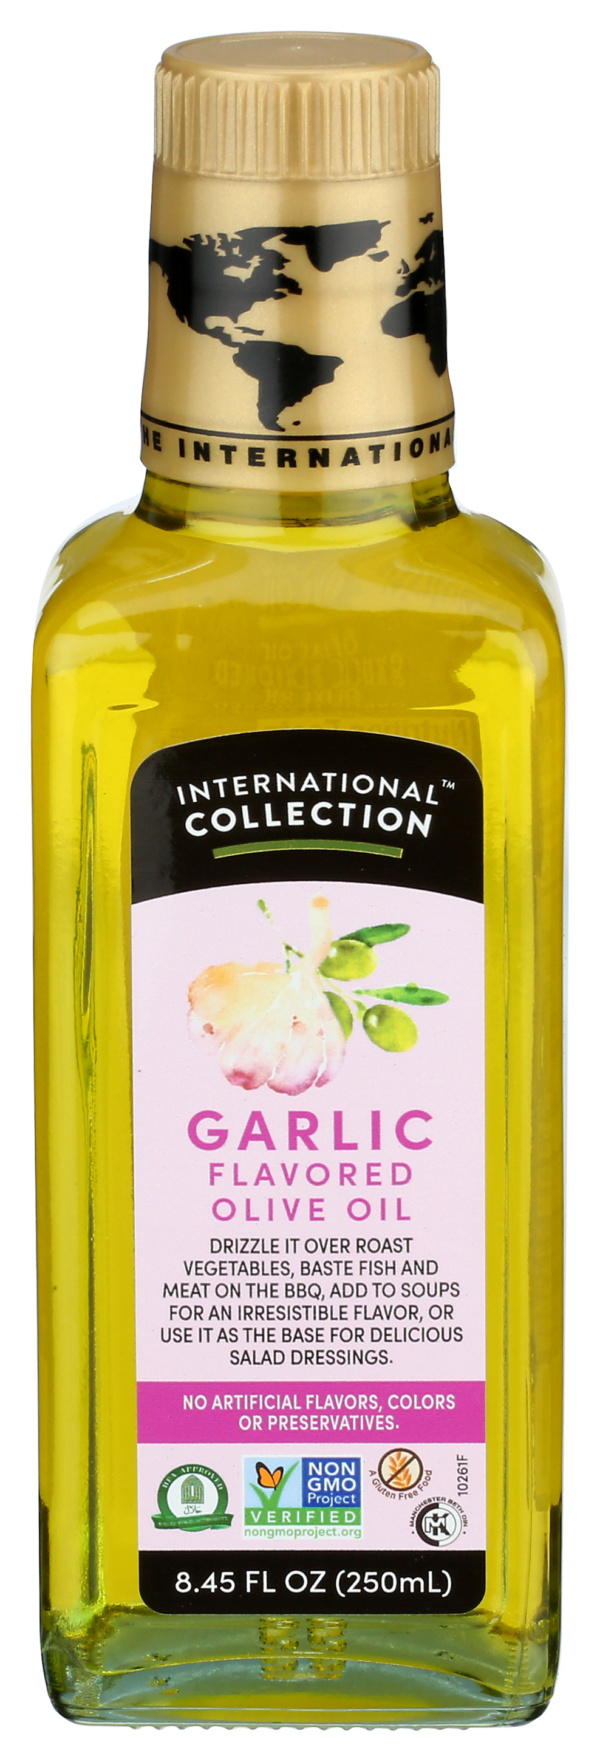 Garlic Flavored Olive Oil